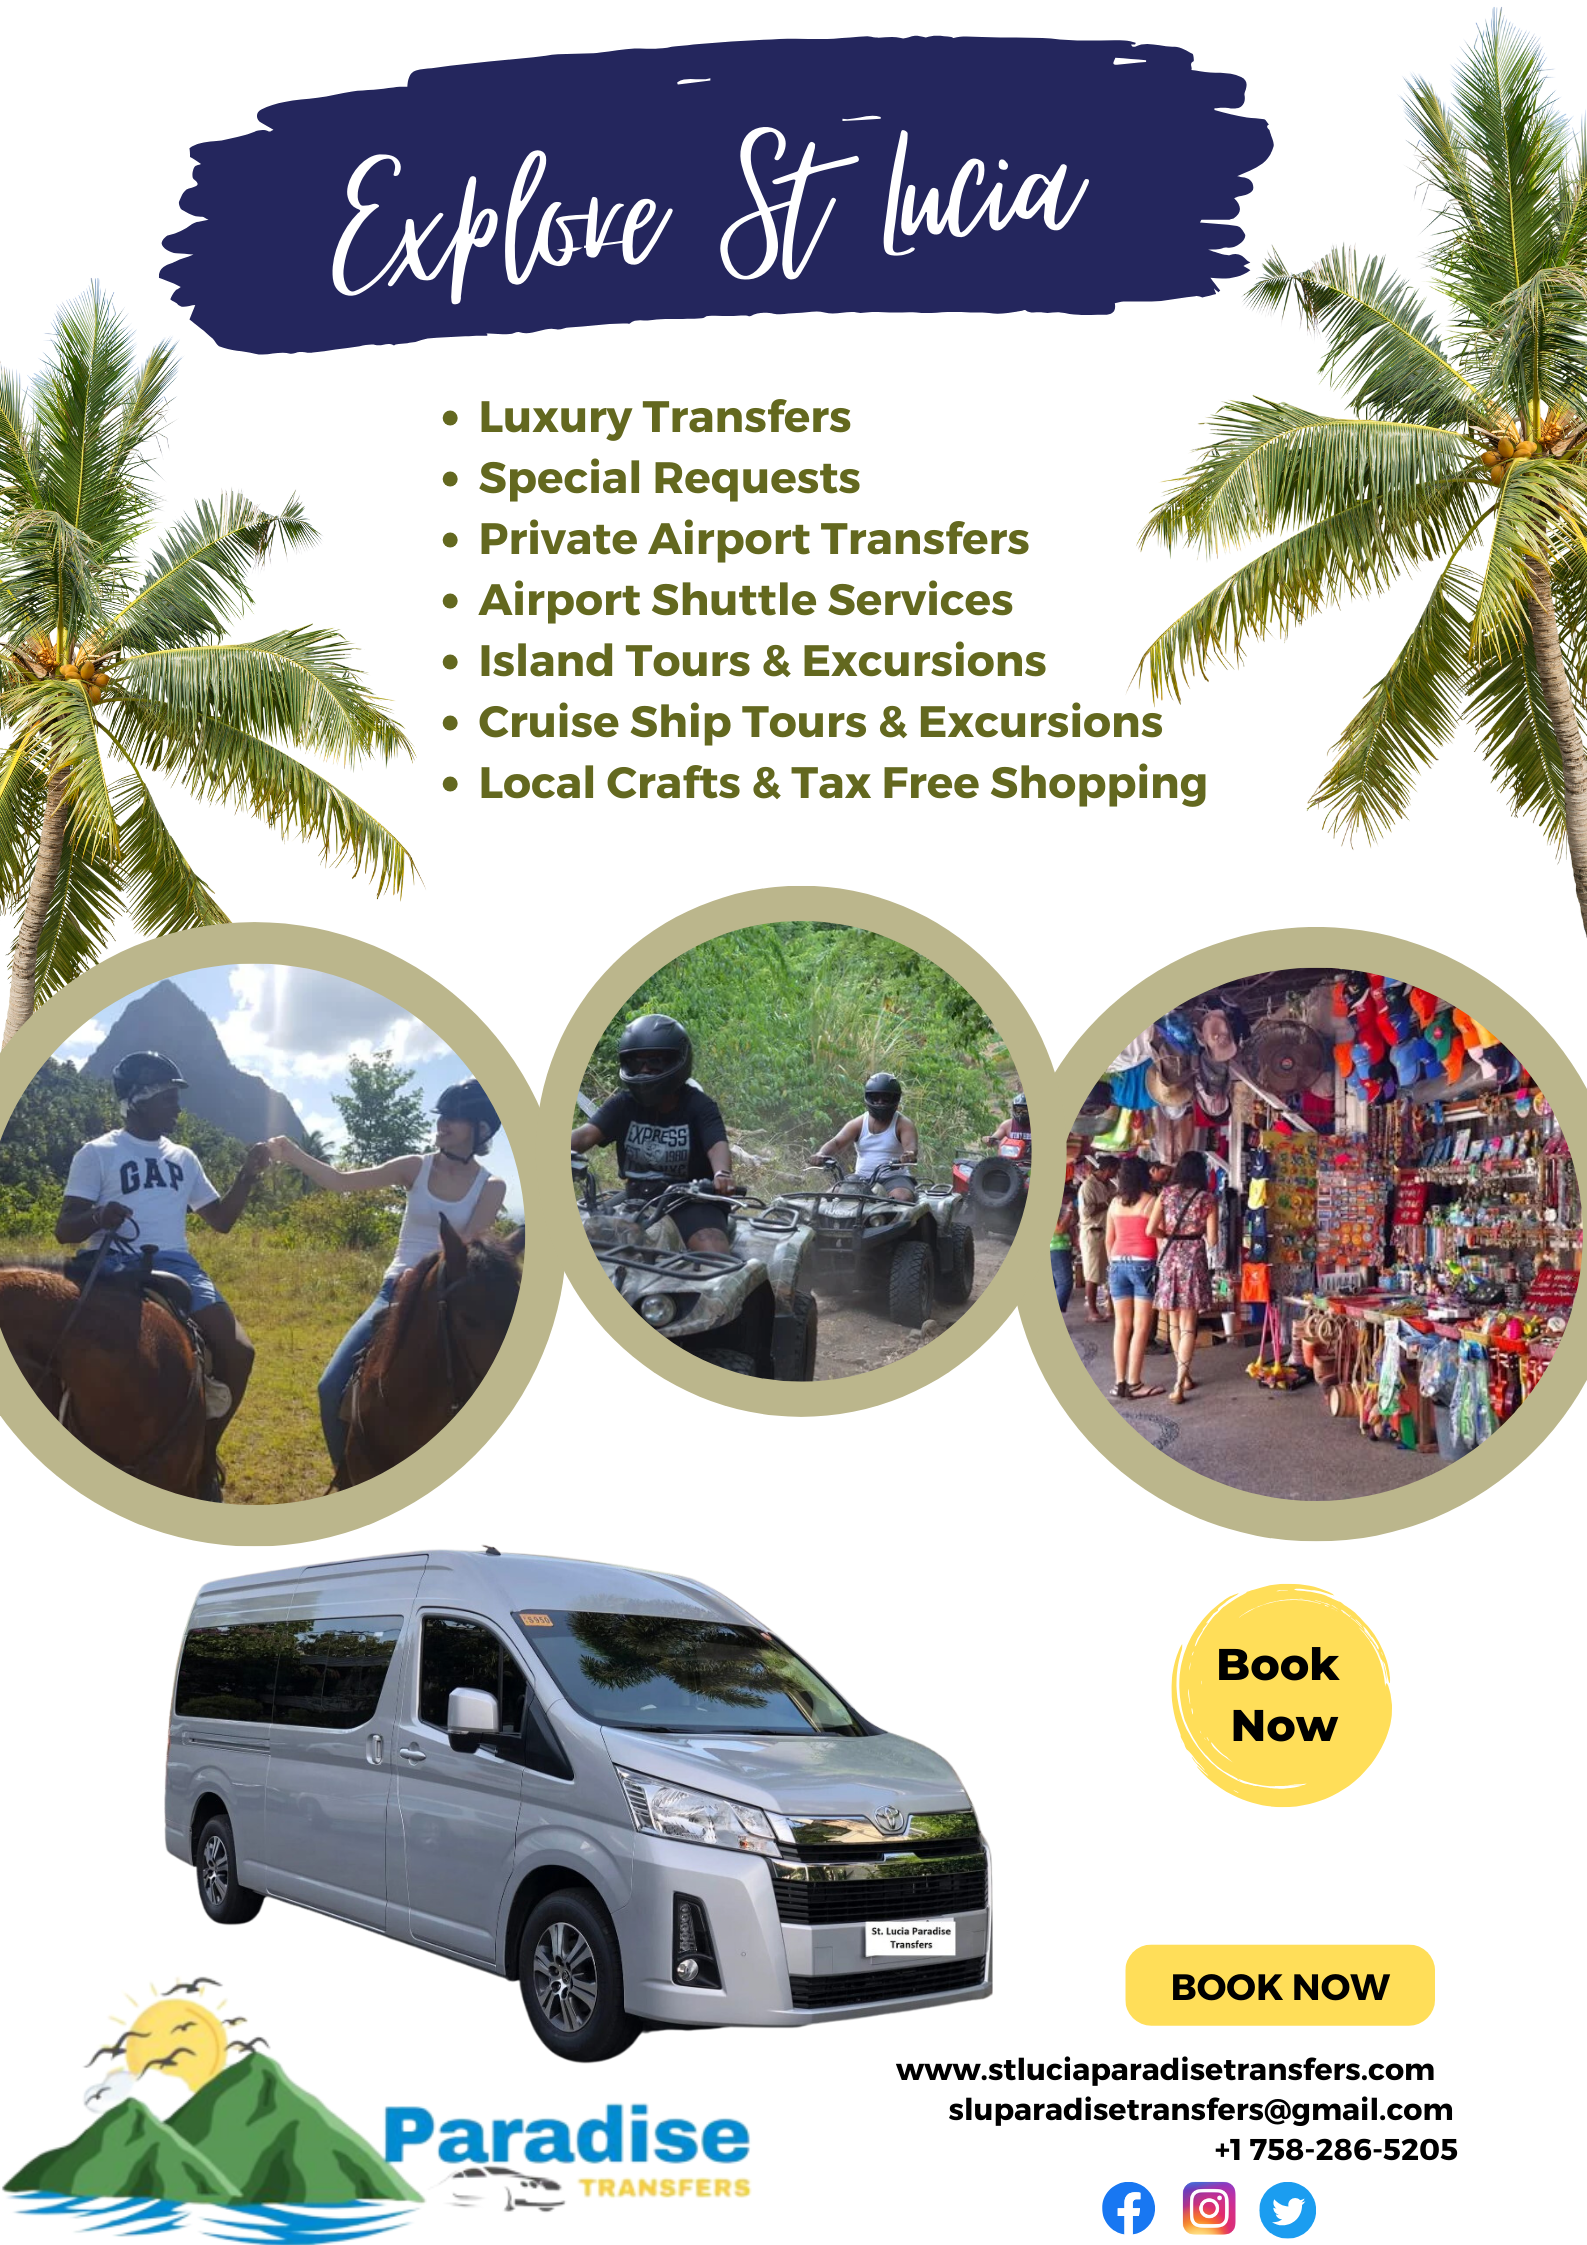 St Lucia Paradise Transfers